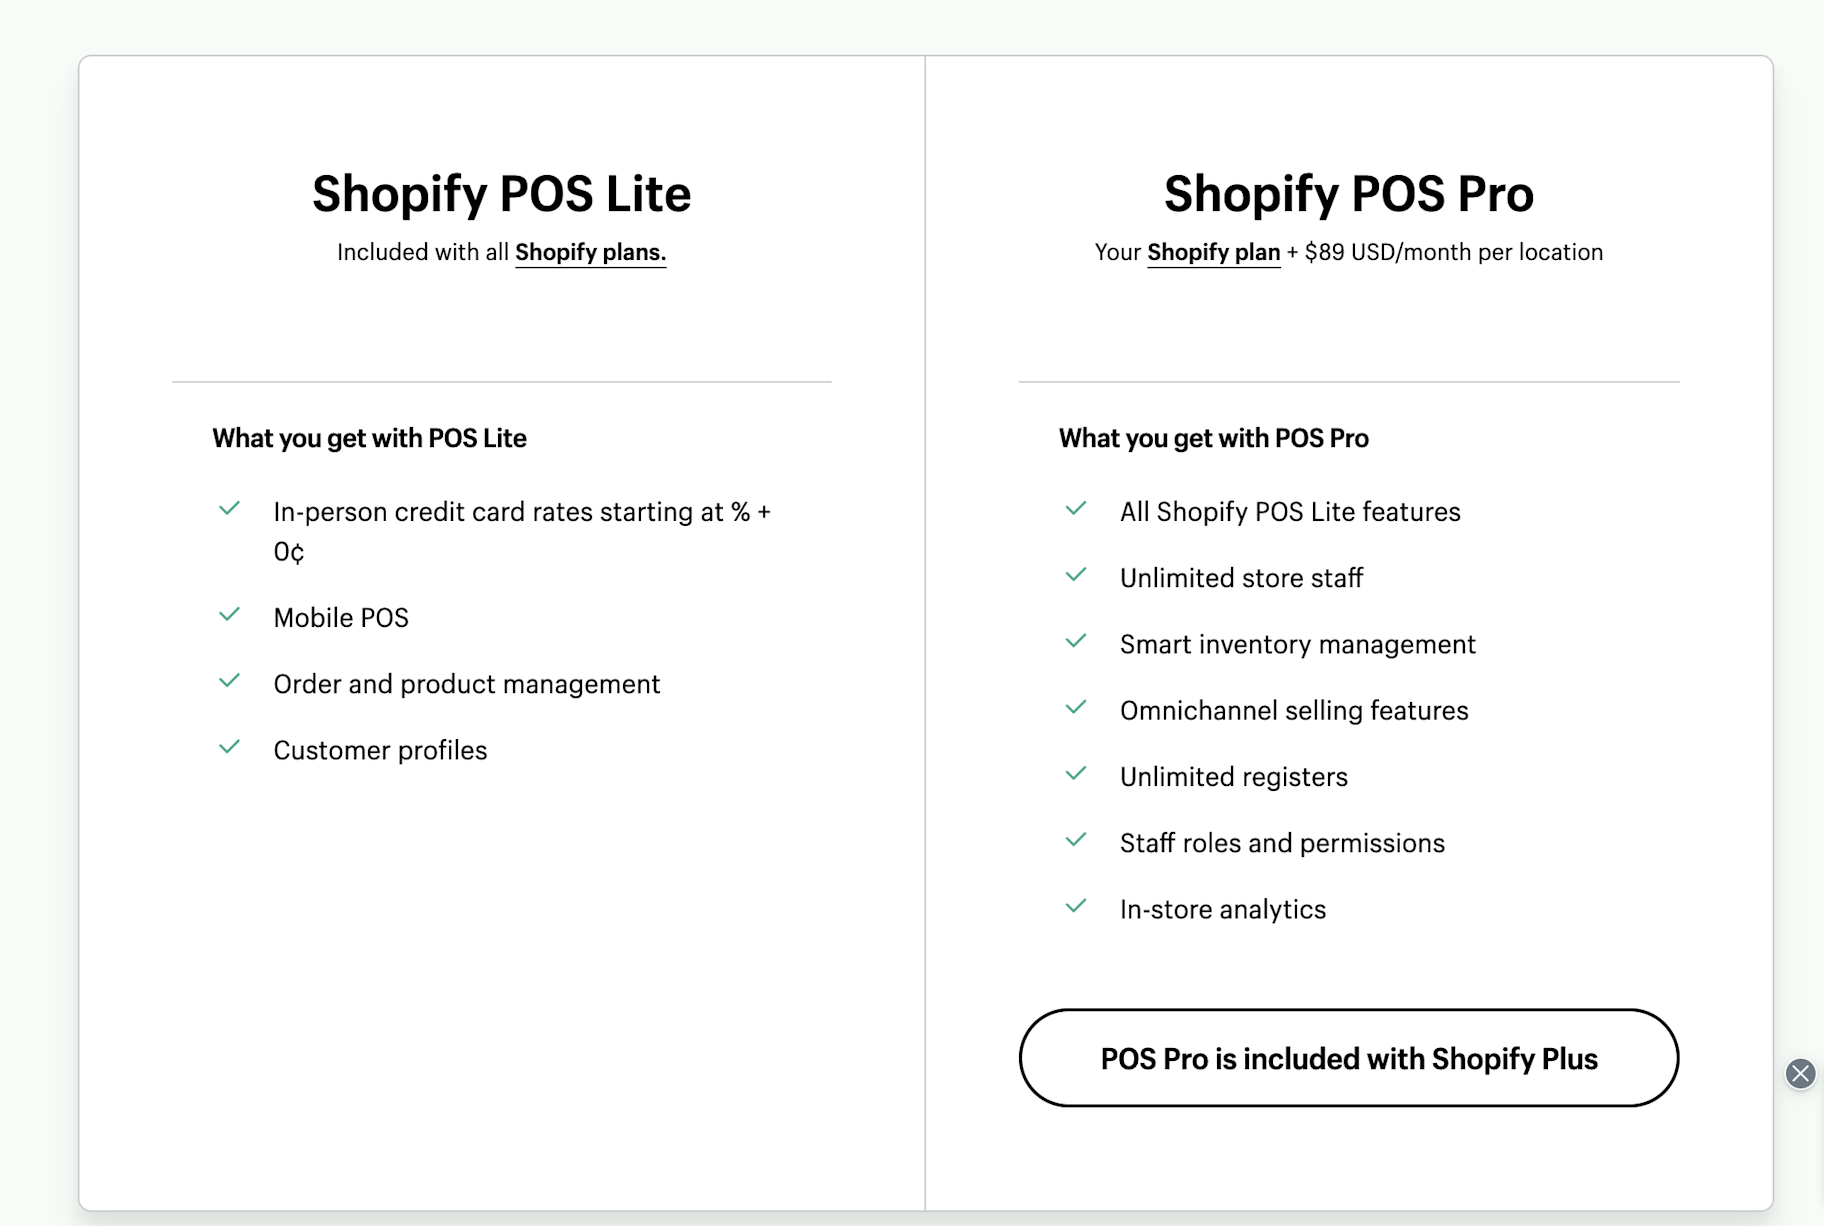 Shopify POS lite vs. POS Pro pricing